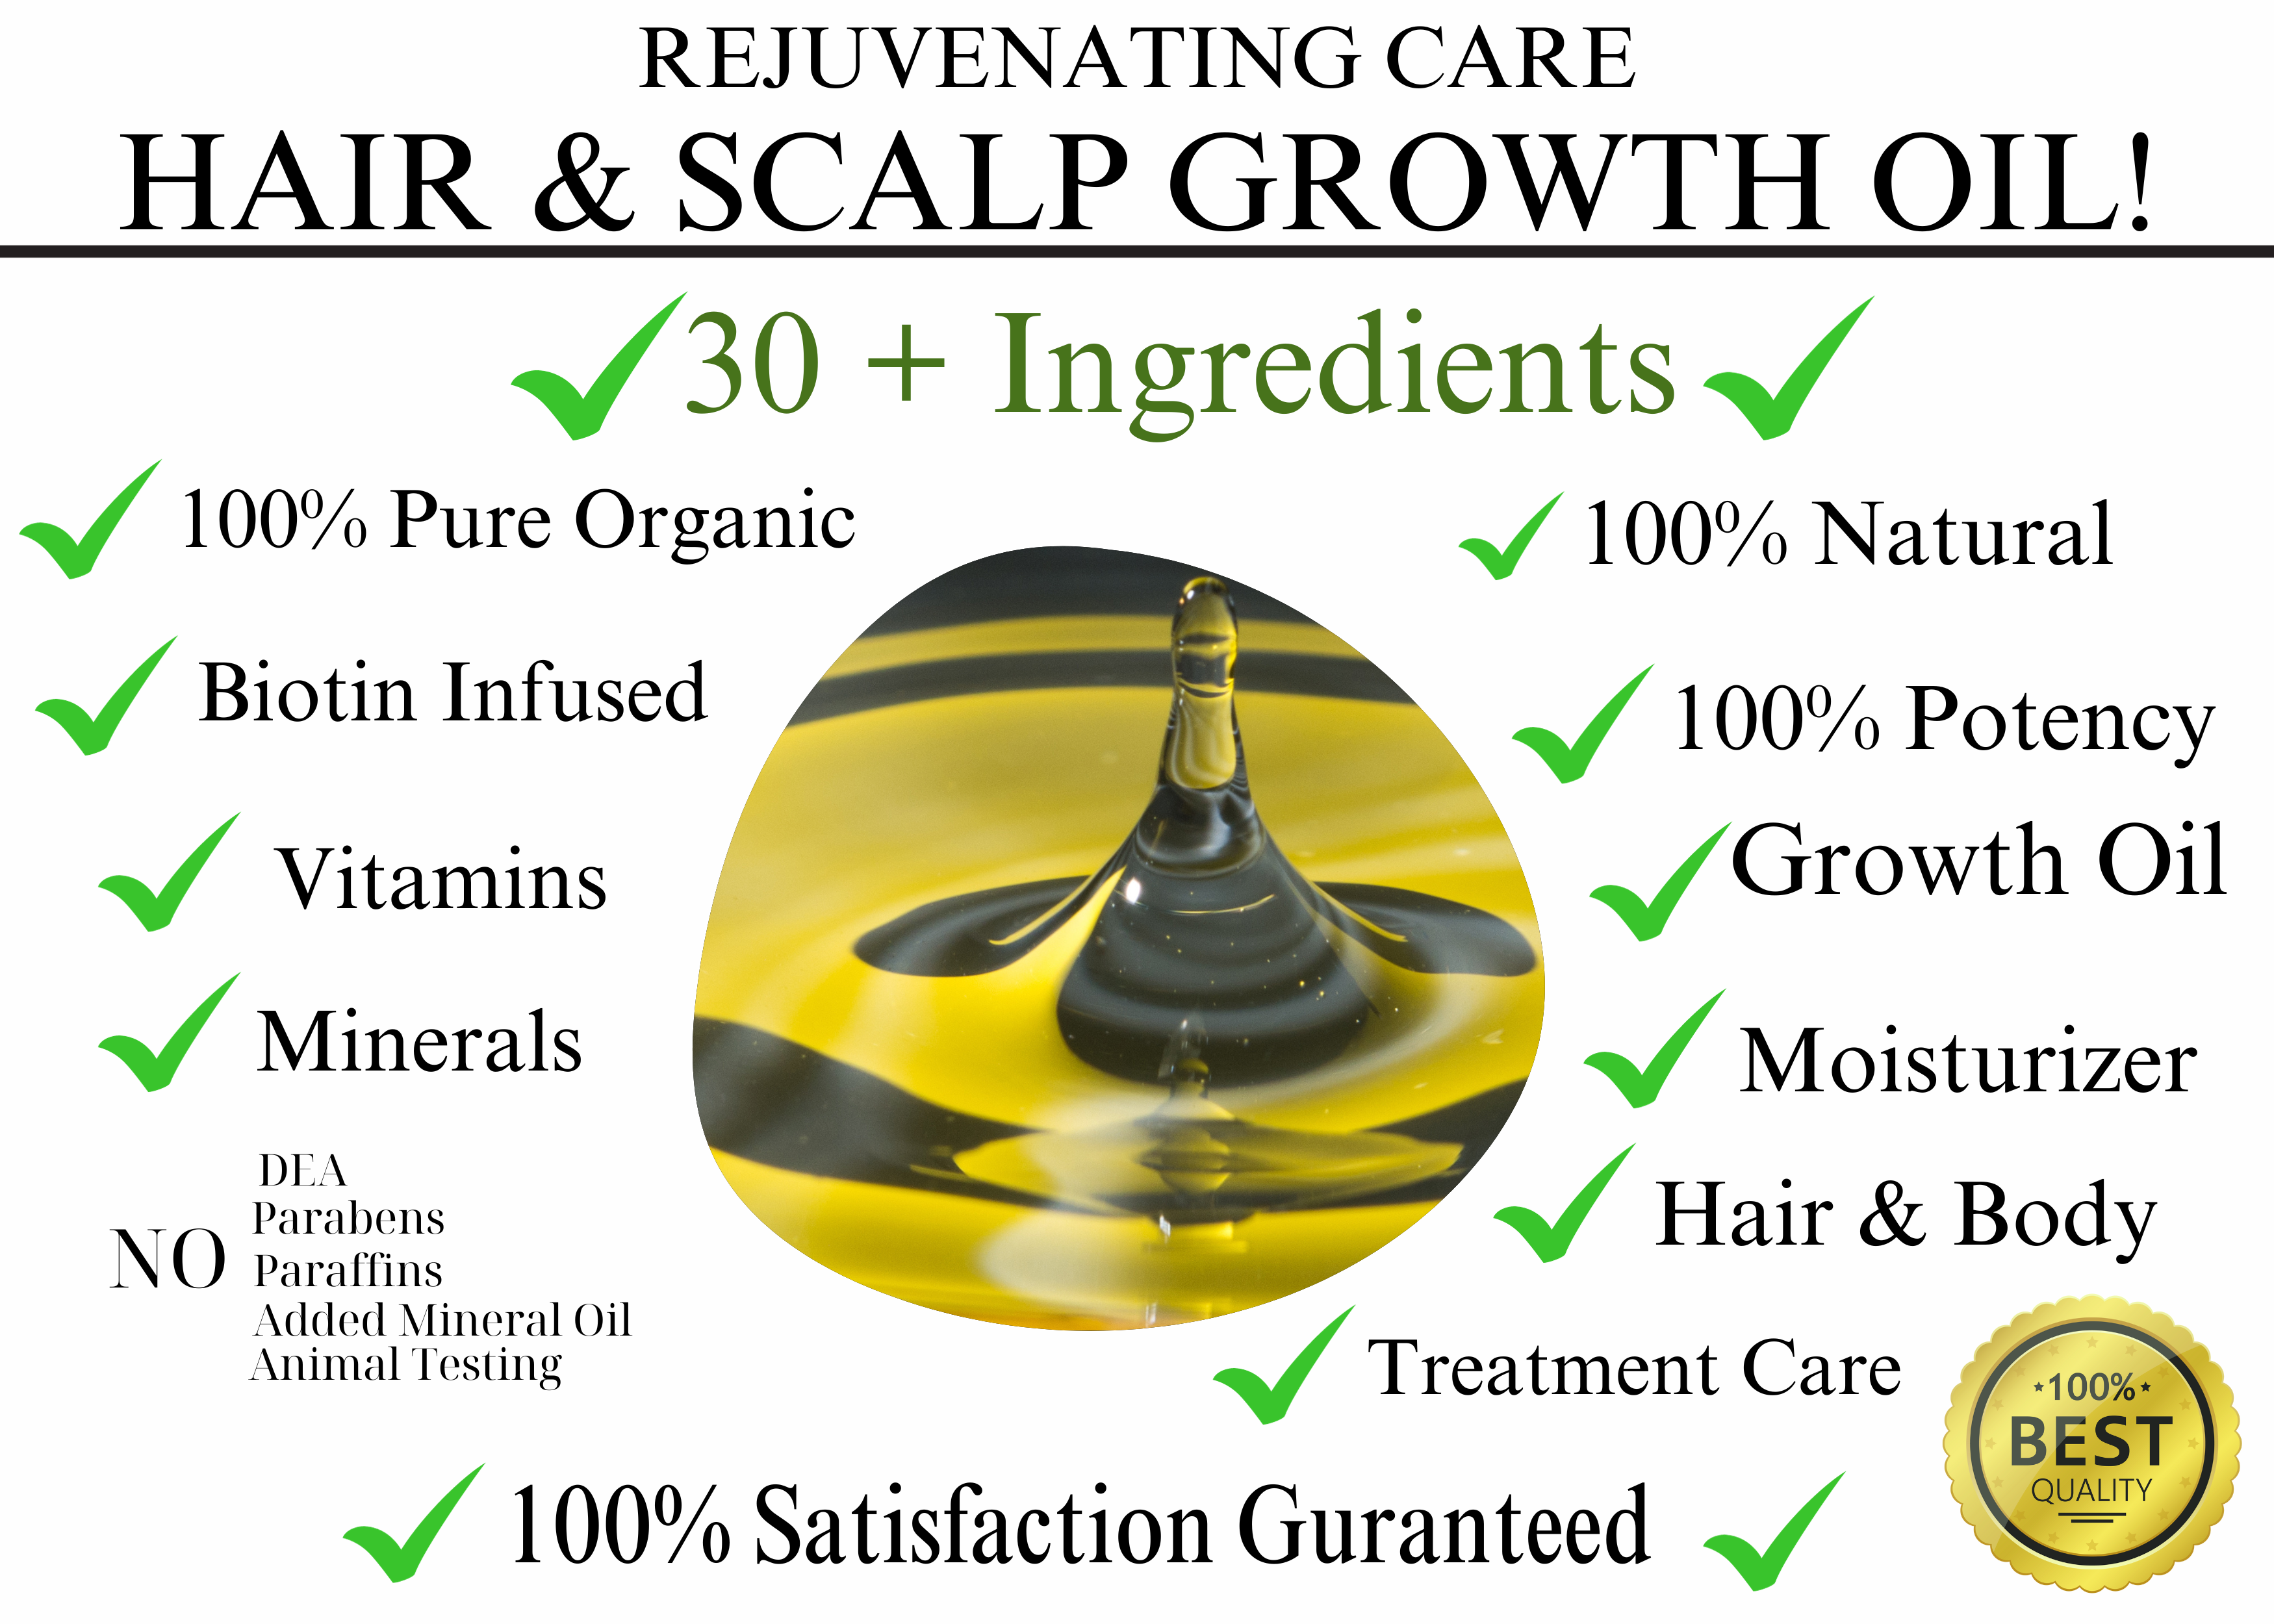 Rose Hair Strengthening and Scalp Growth Oil 4 ounce